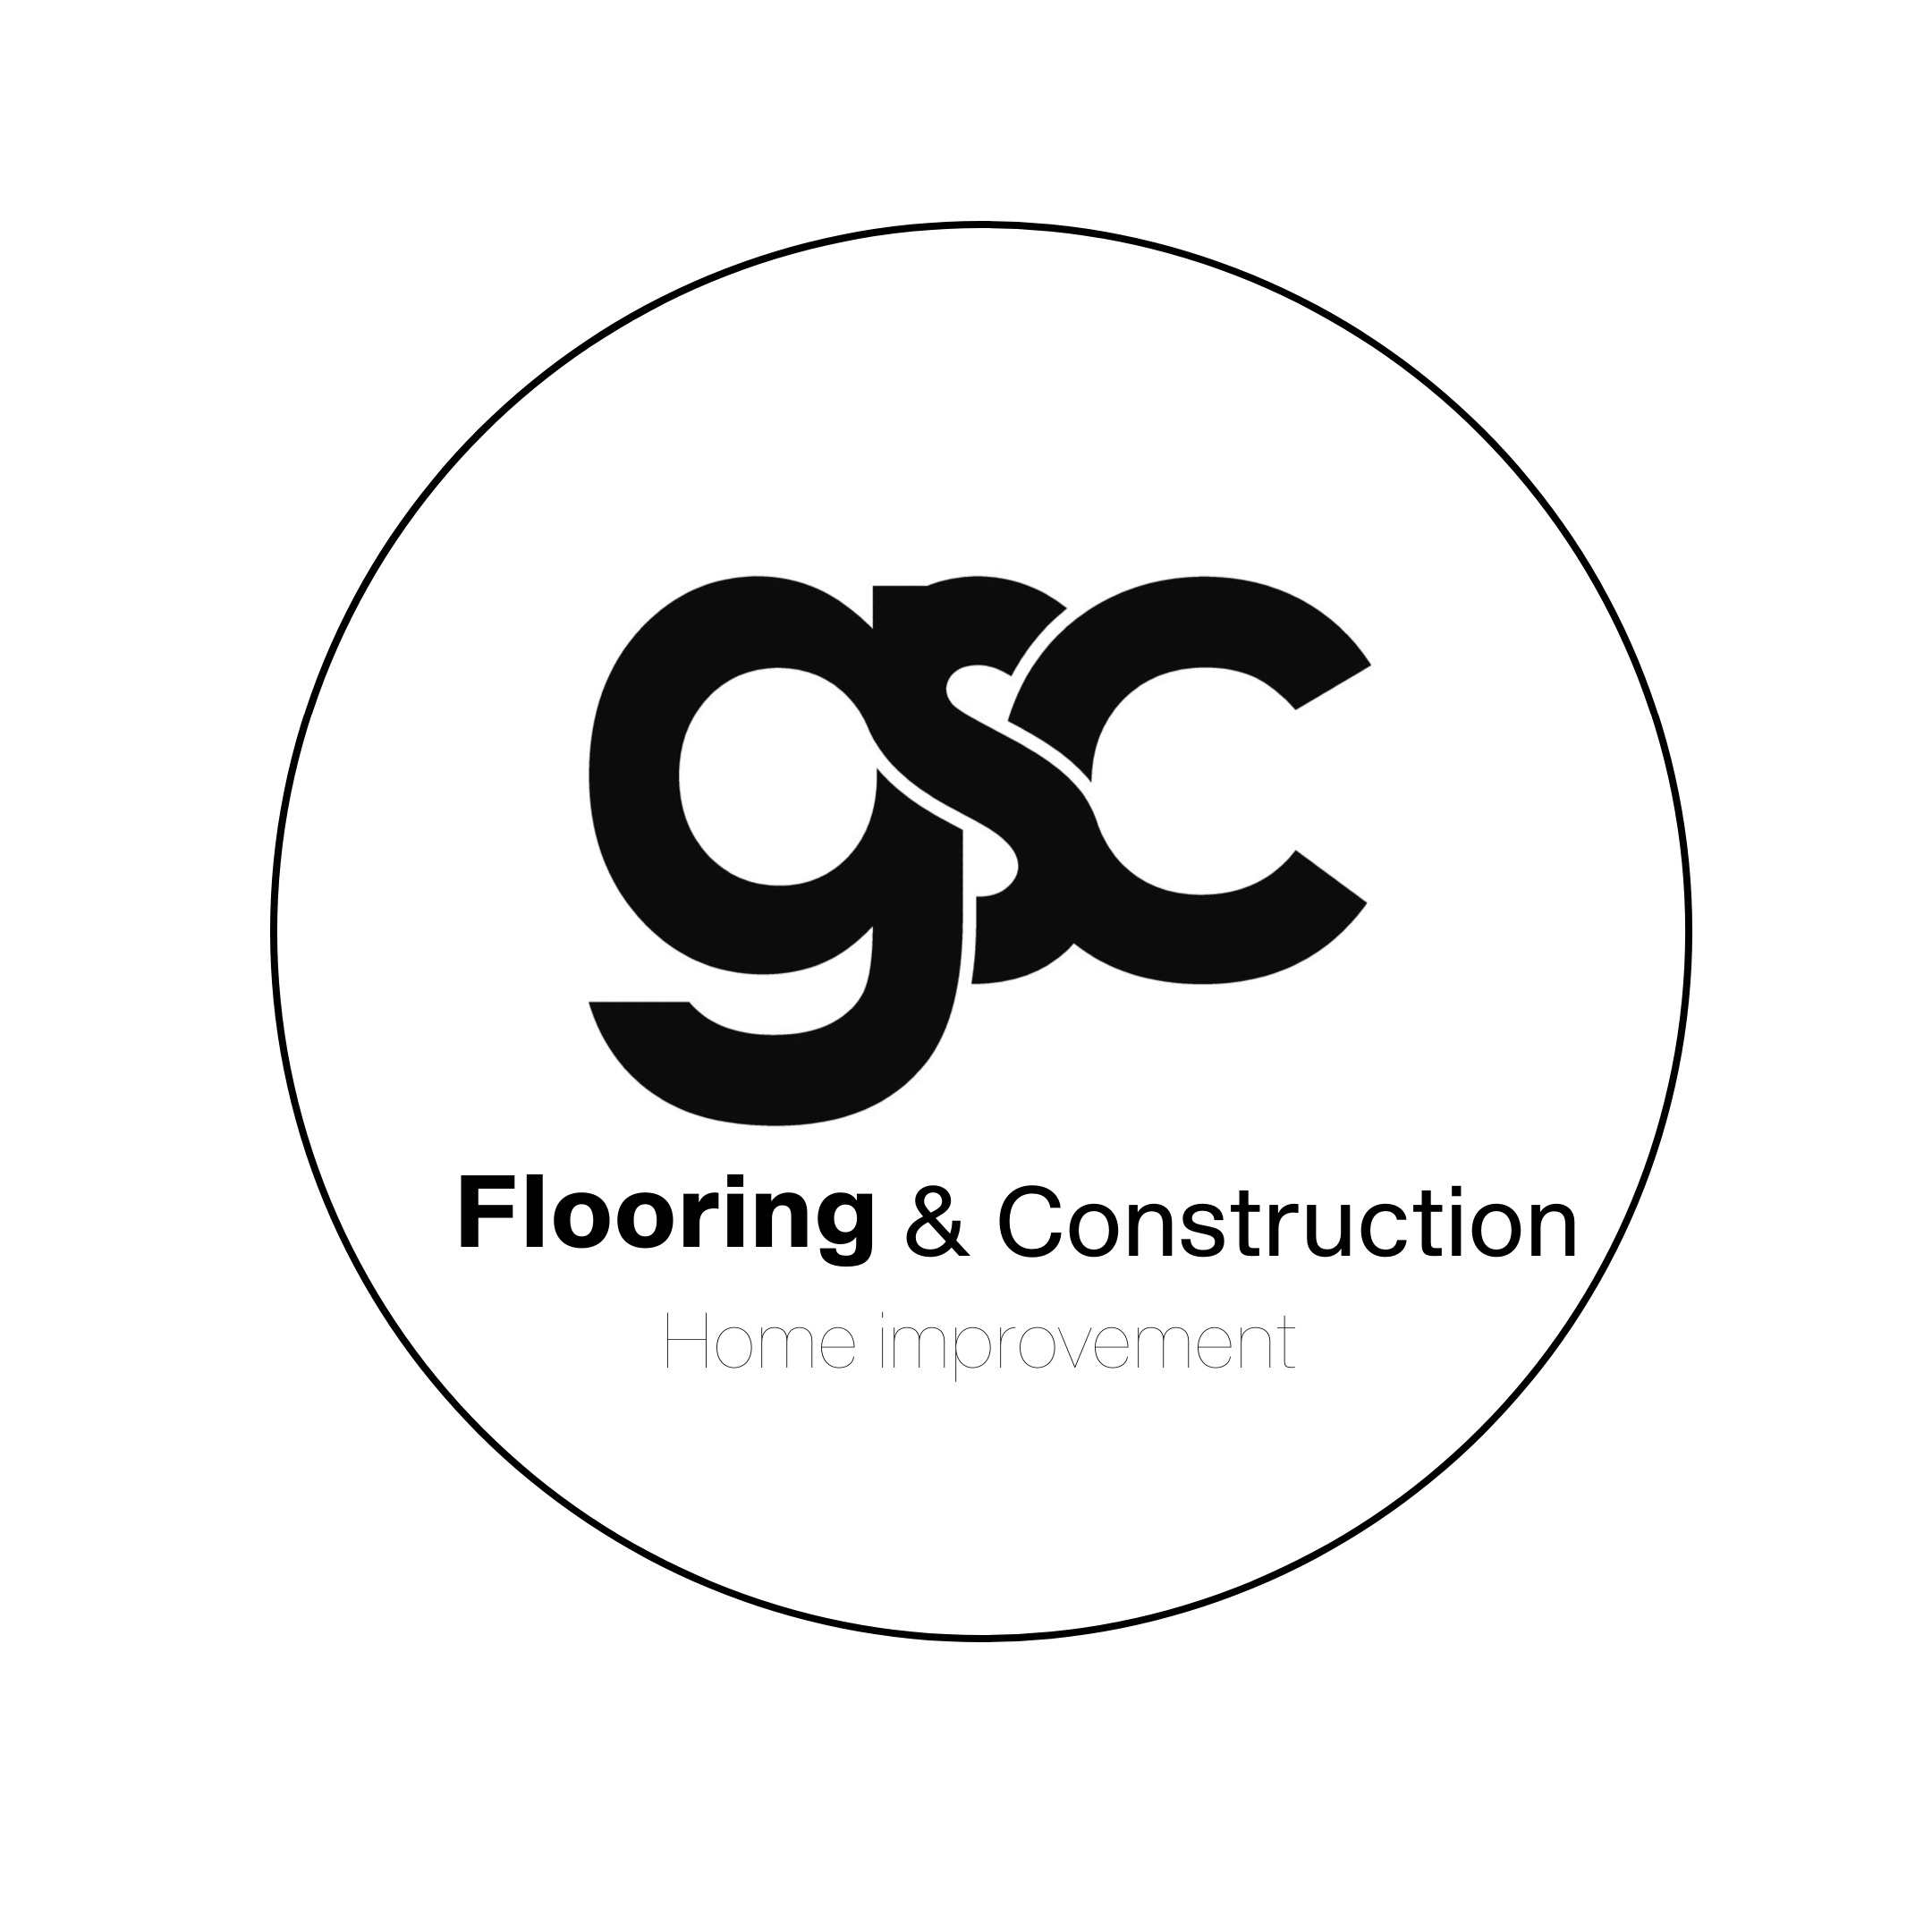 GSC Flooring Logo